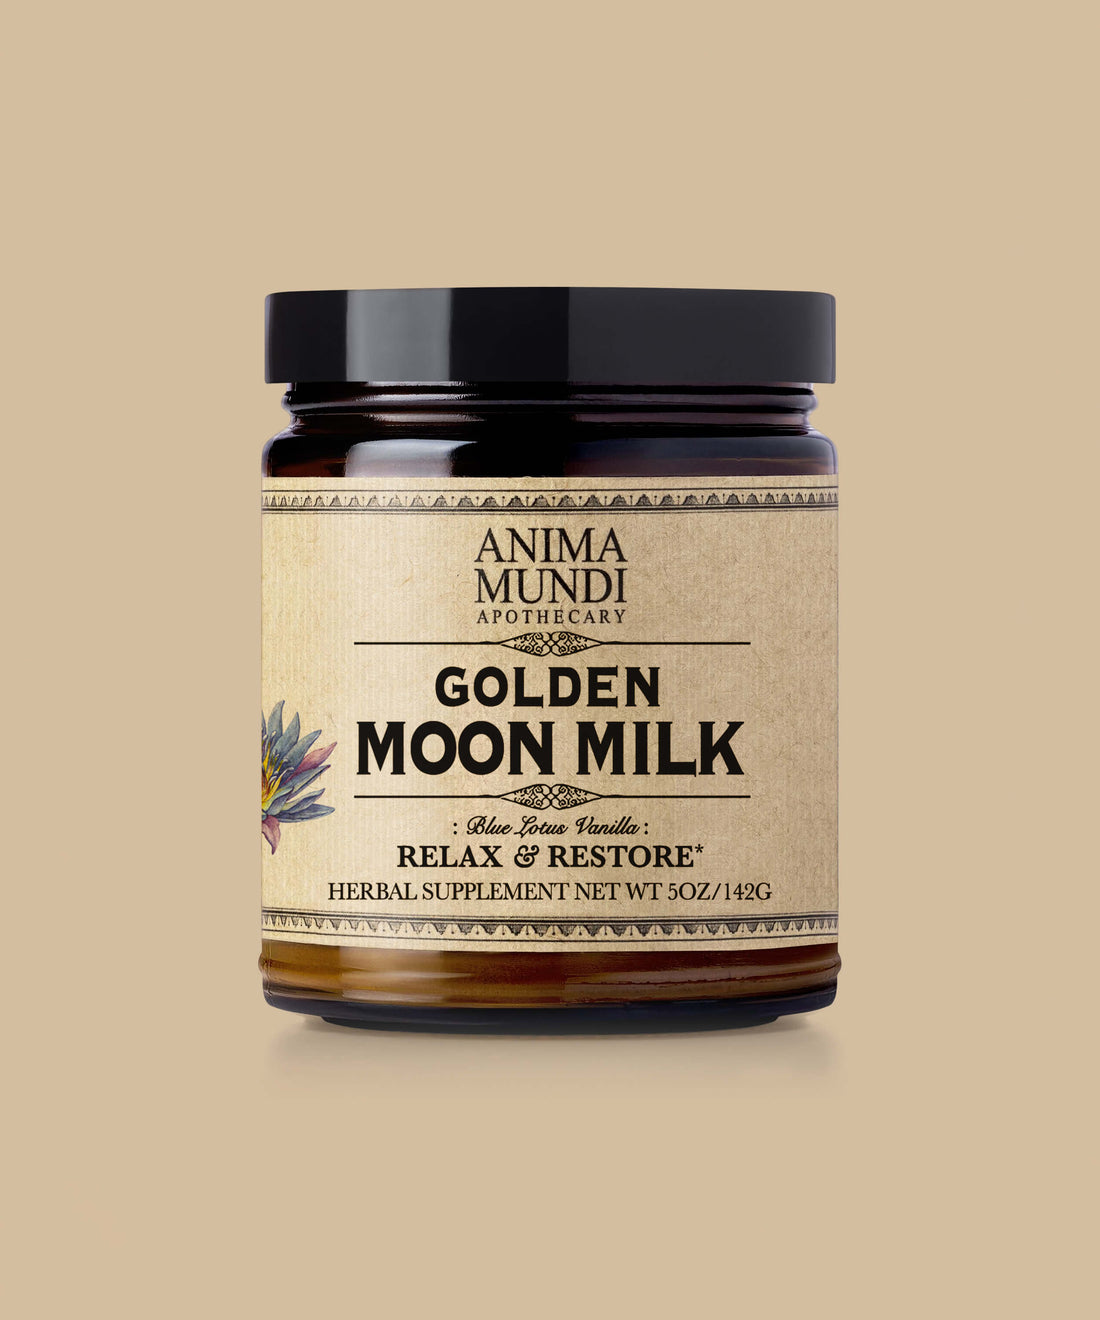 GOLDEN MOON MILK BY ANIMA MUNDI